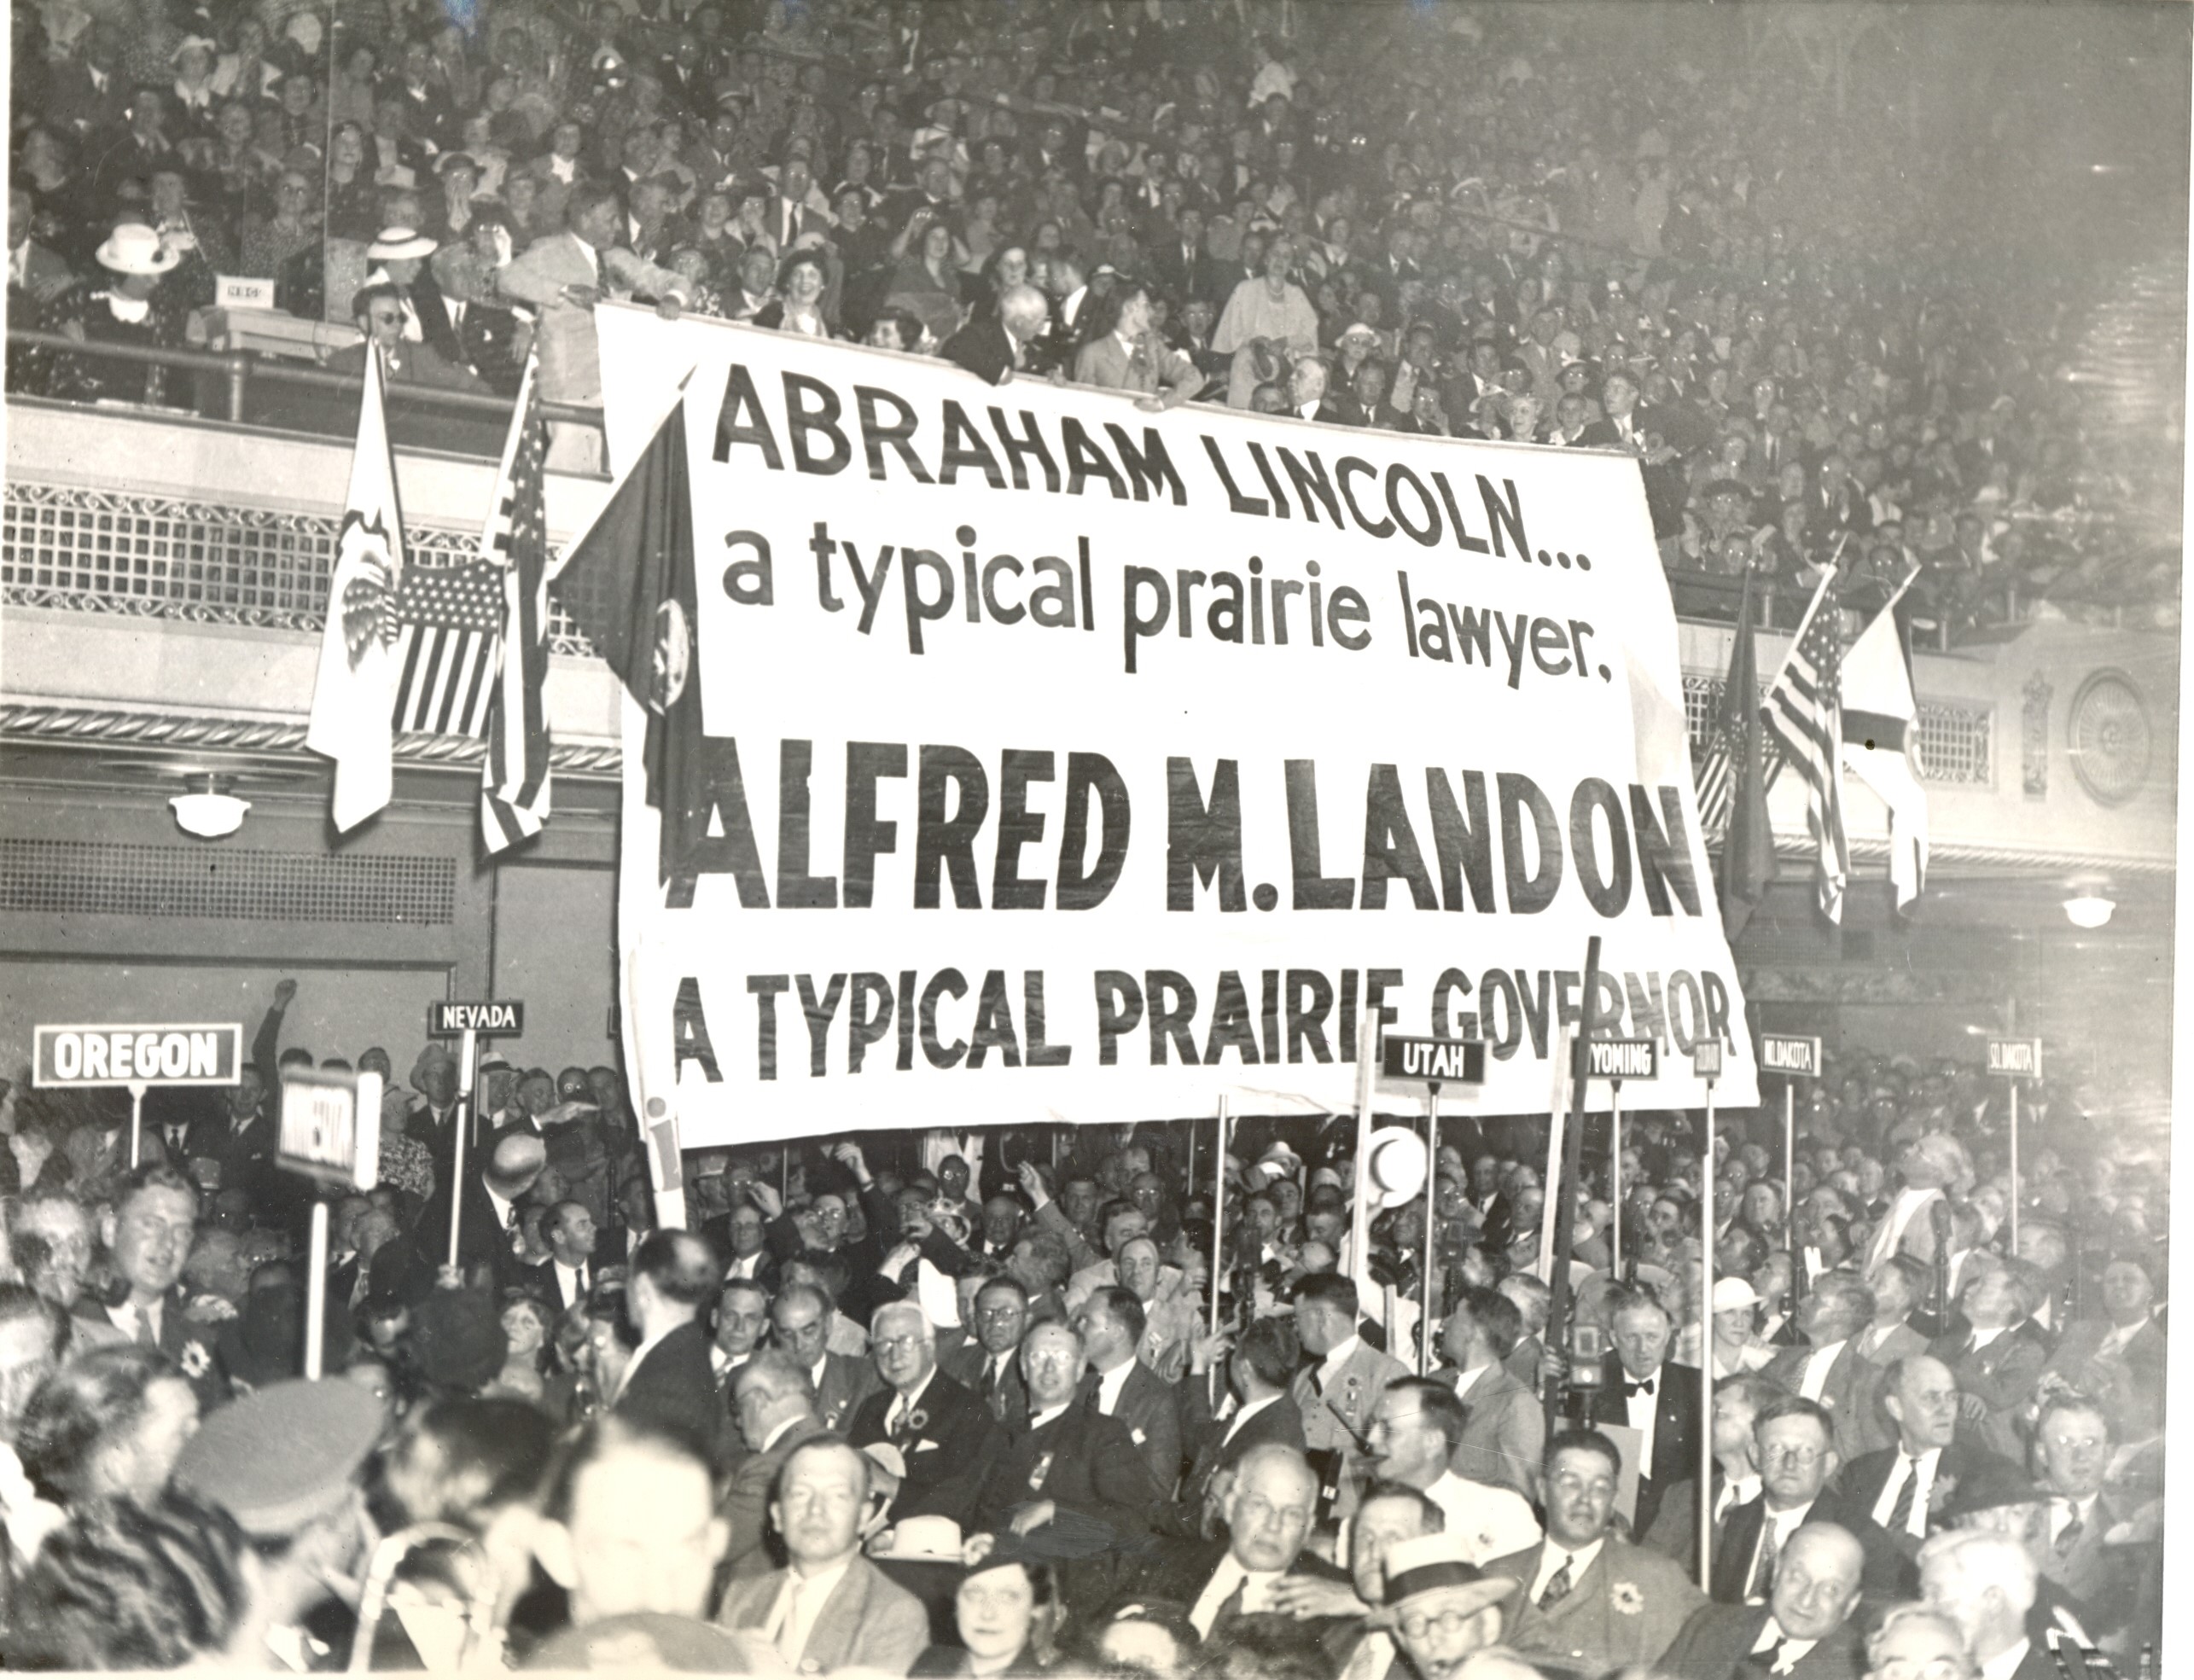 World Wide Photo. June 11, 1936. "Landon Demonstration at G.O.P. Convention